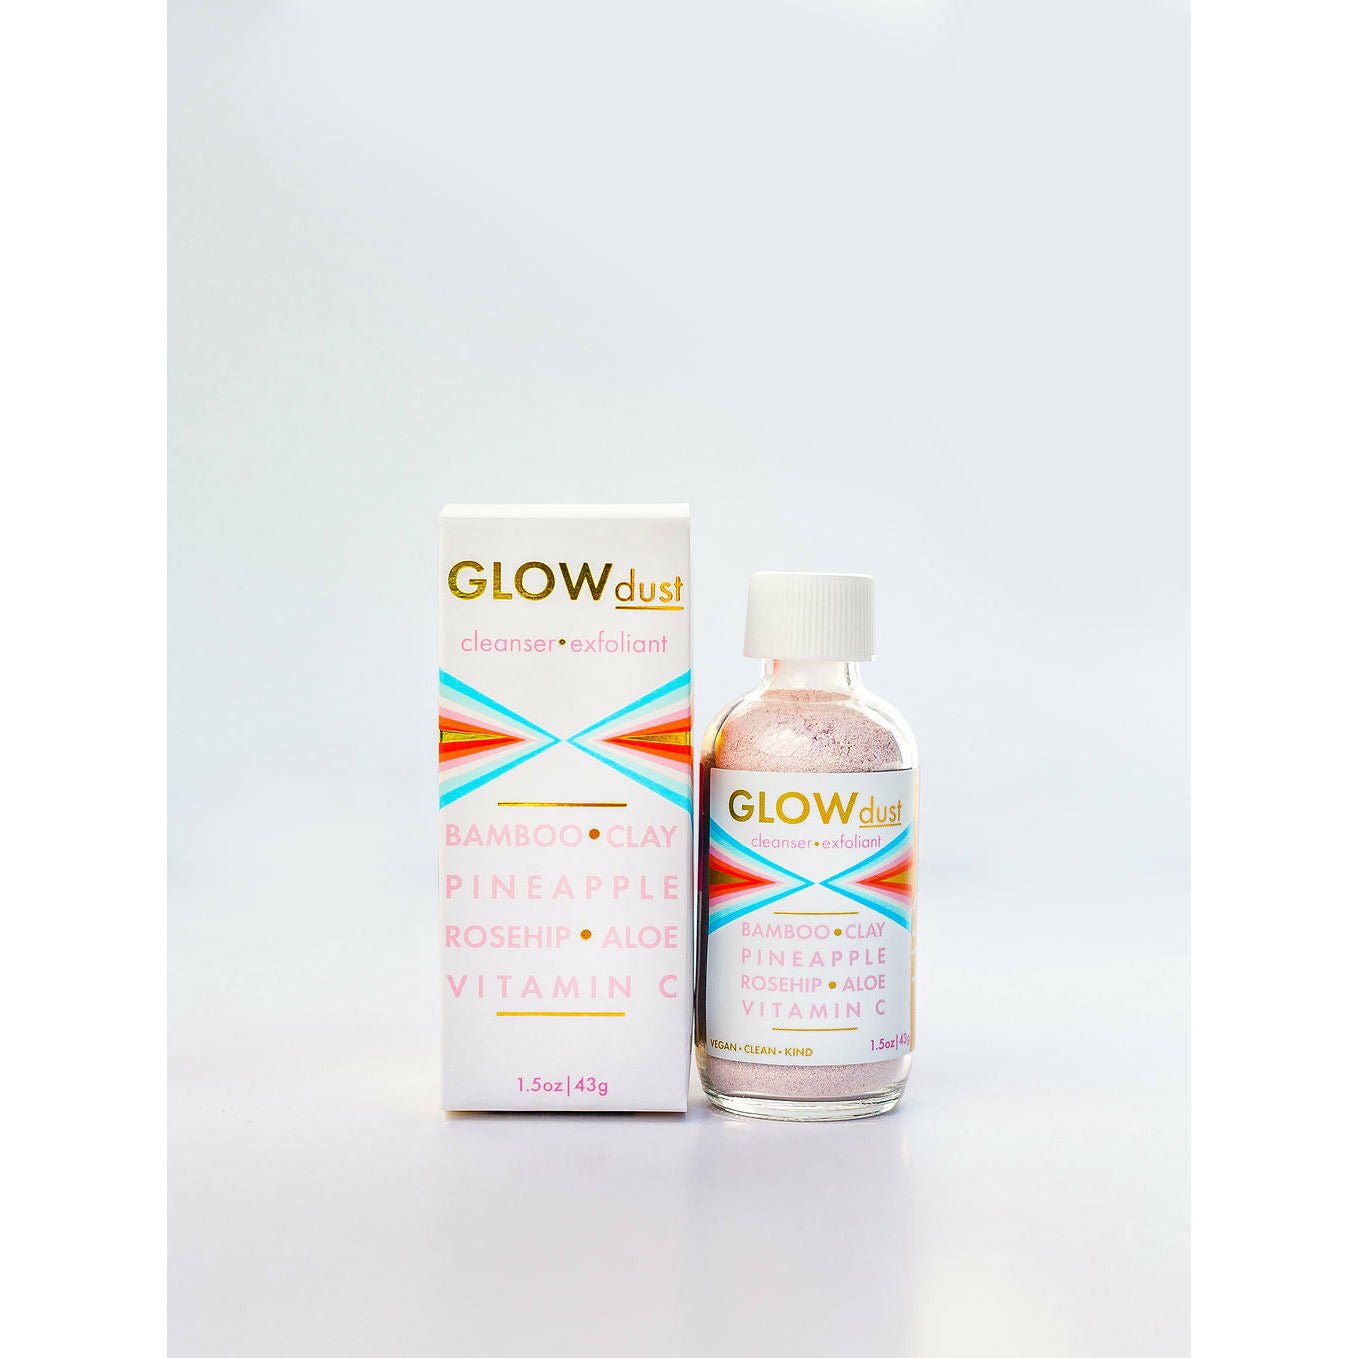 GLOW dust -Cleanser- Exfoliant - ALEX